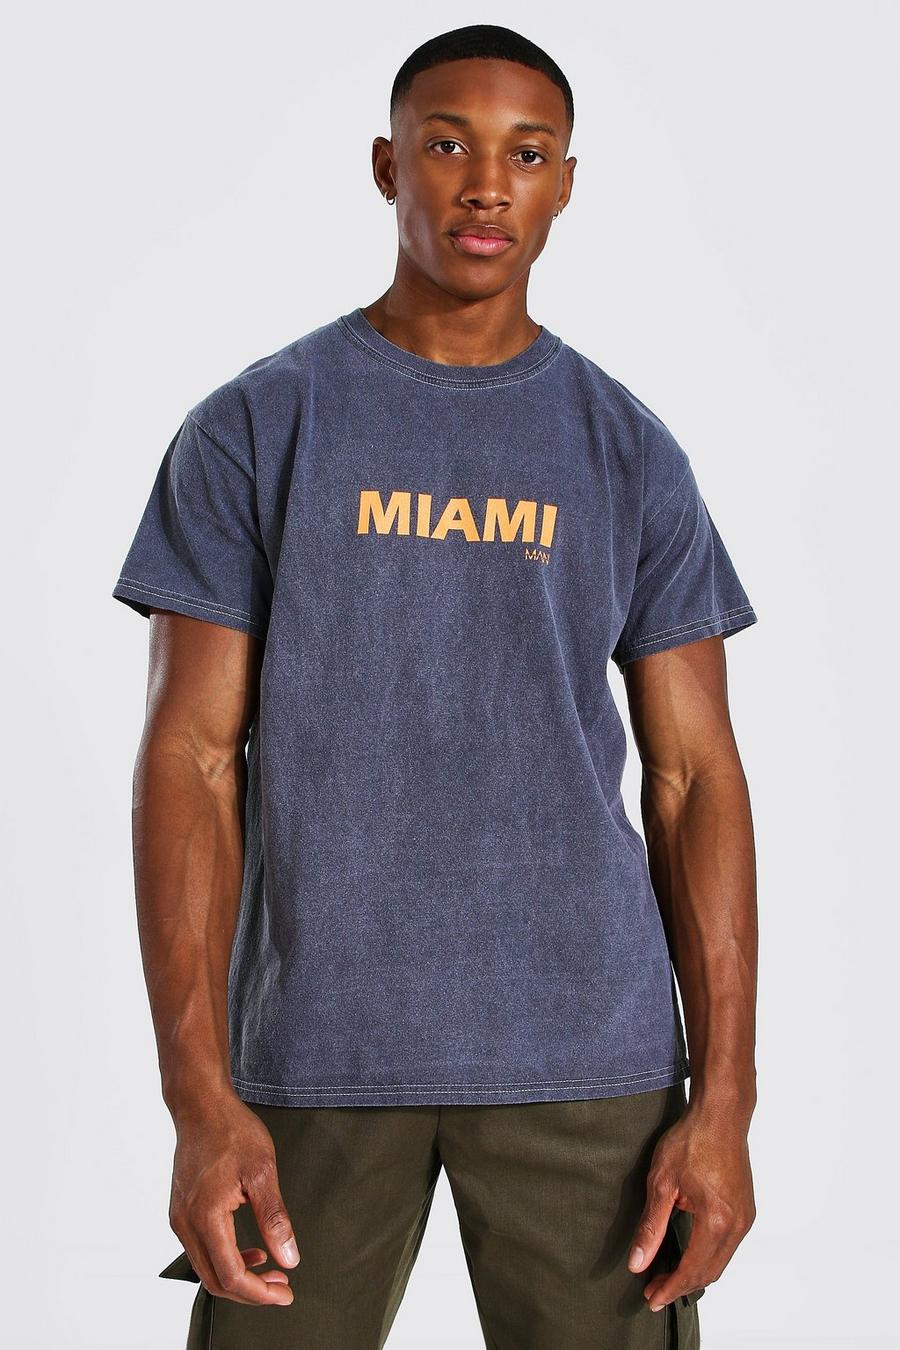 Houtskool grey Oversized Overdye Miami T-Shirt image number 1